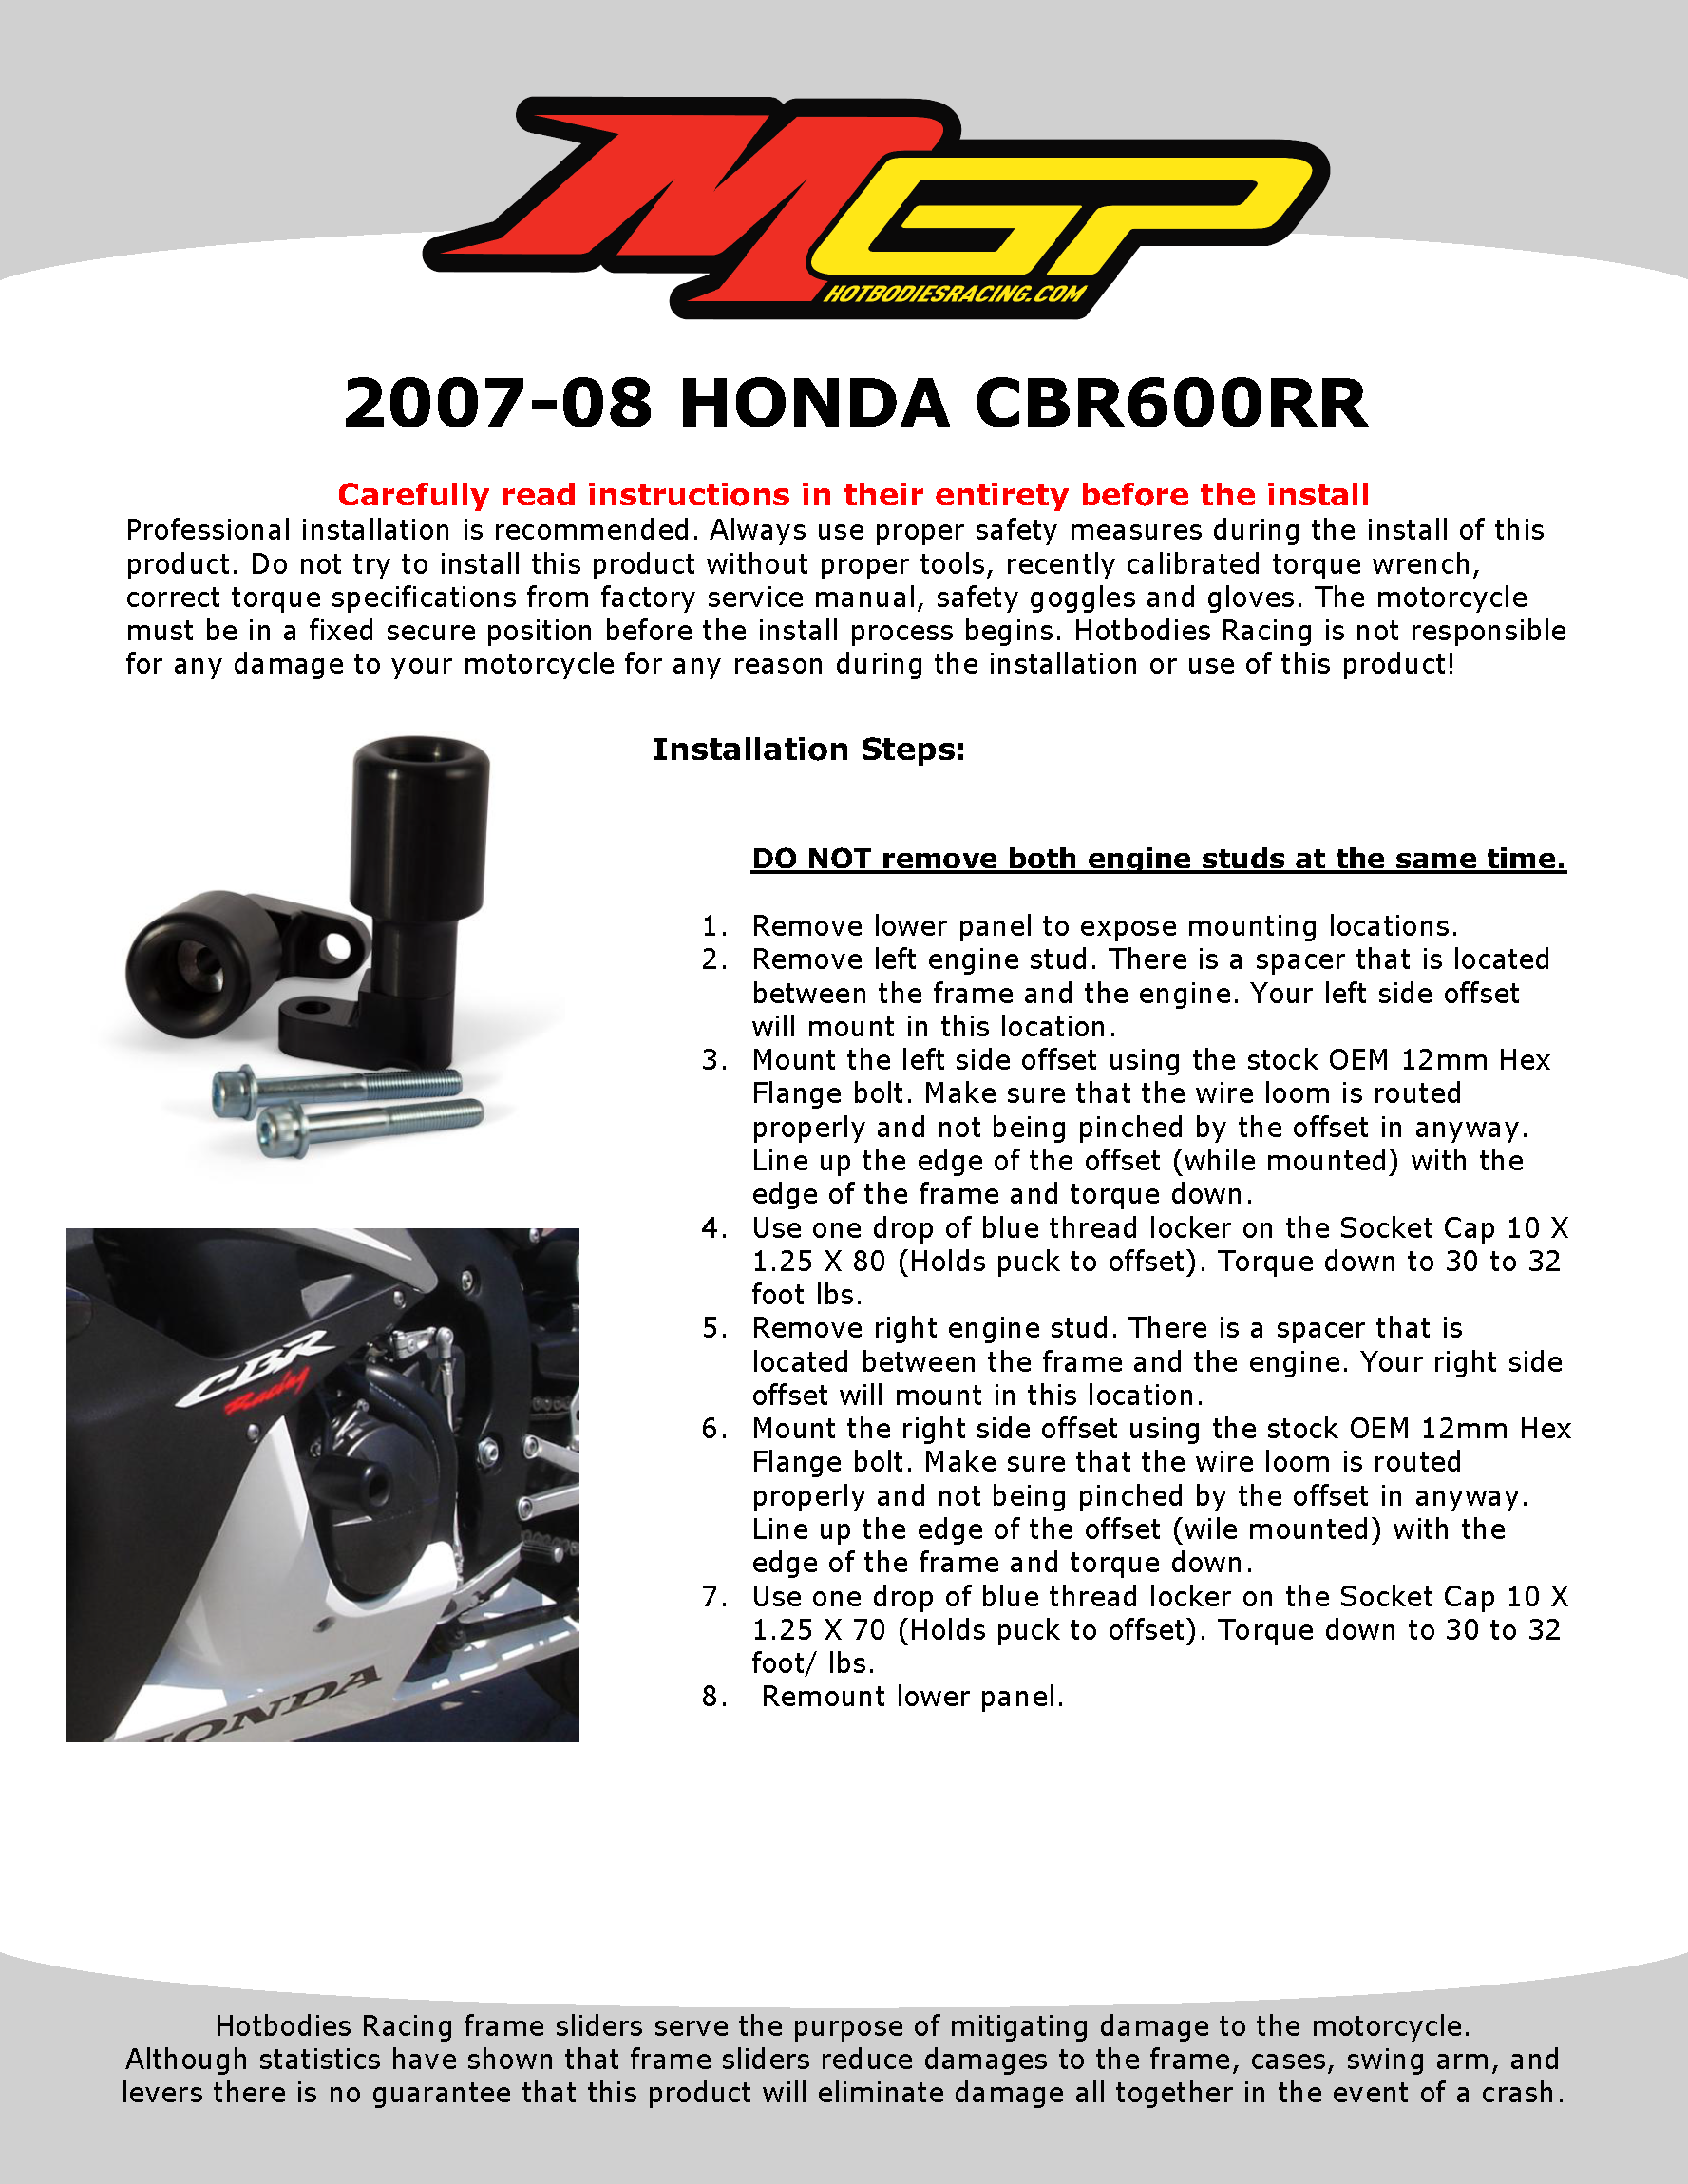 

2007-08 HONDA CBR600RR Frame Sliders Installation

